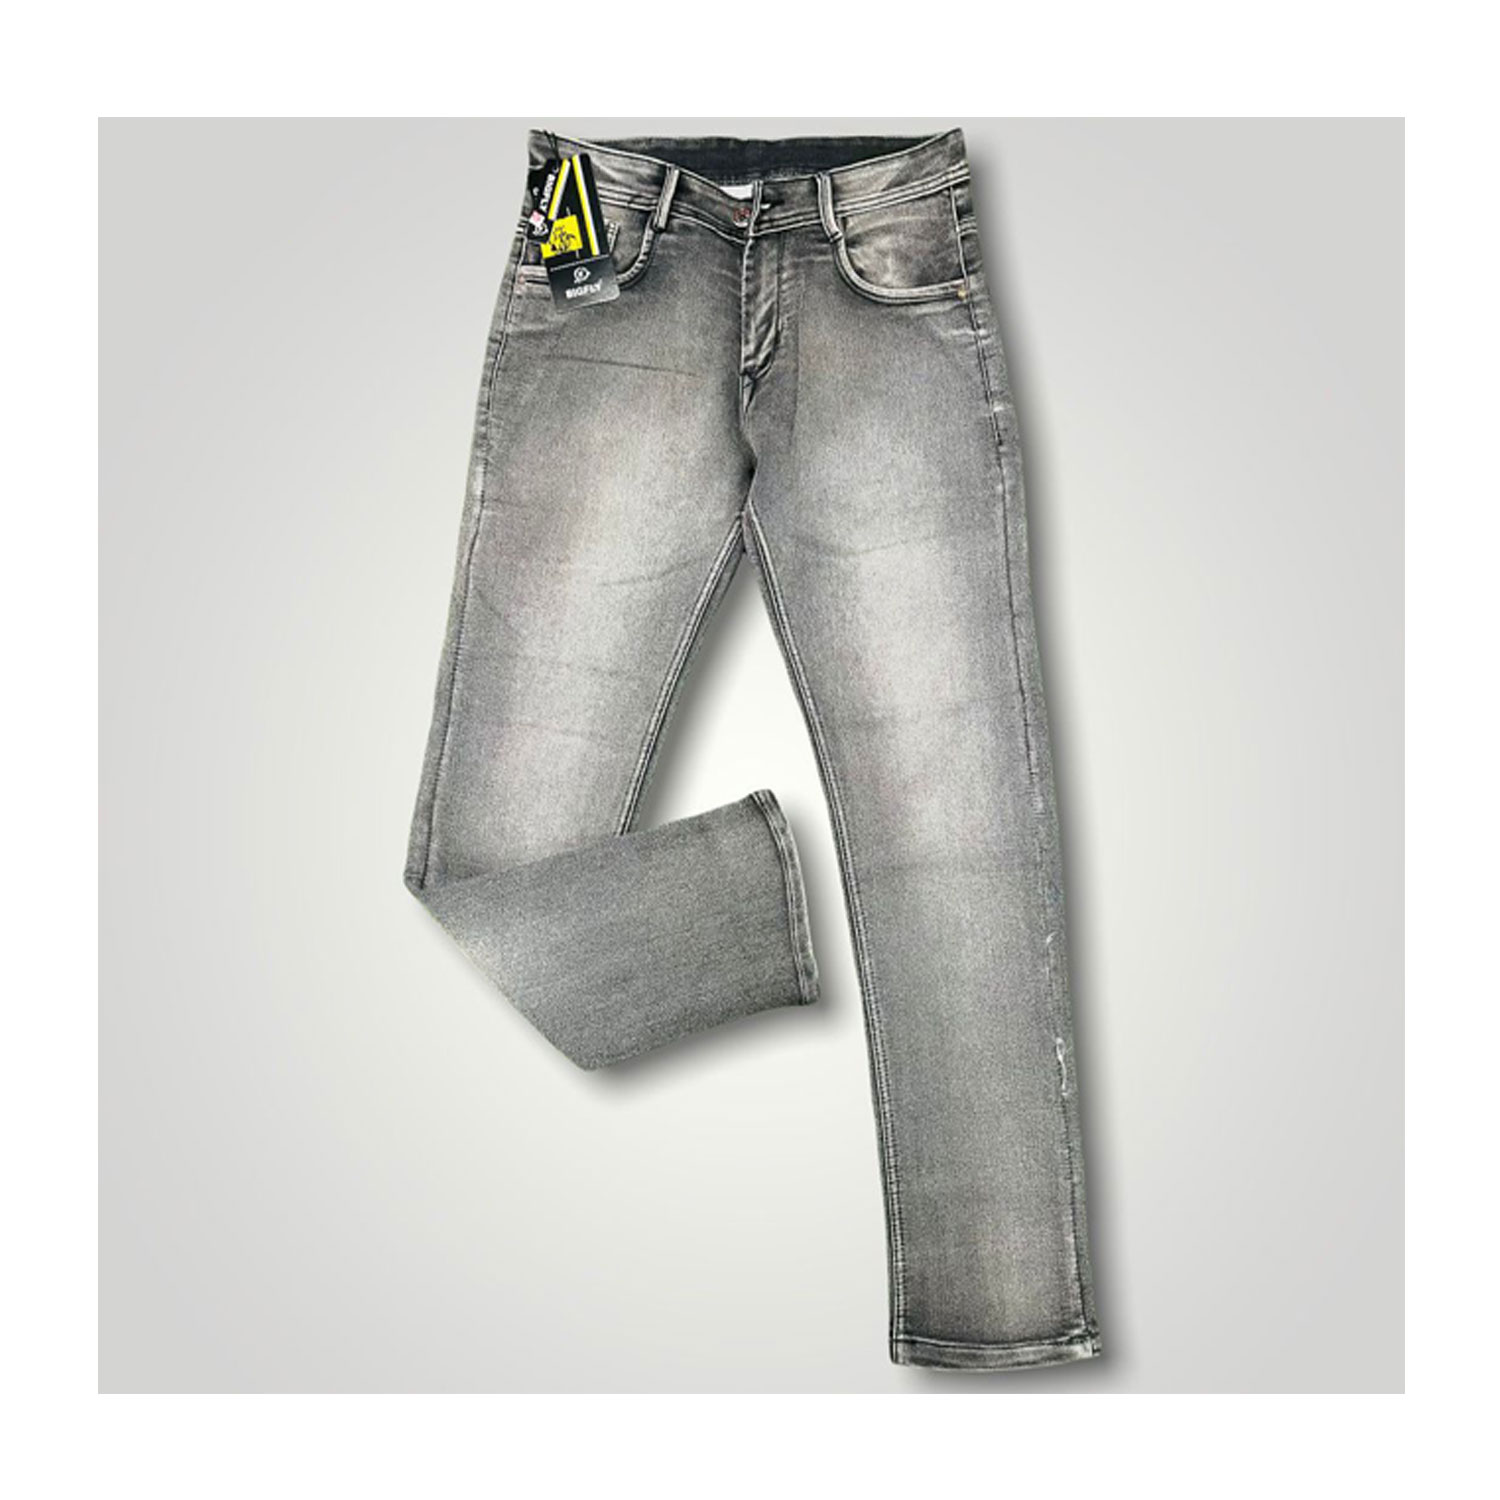 BIG FLY Denim Dark Grey Jeans For Men's | Pack of 5